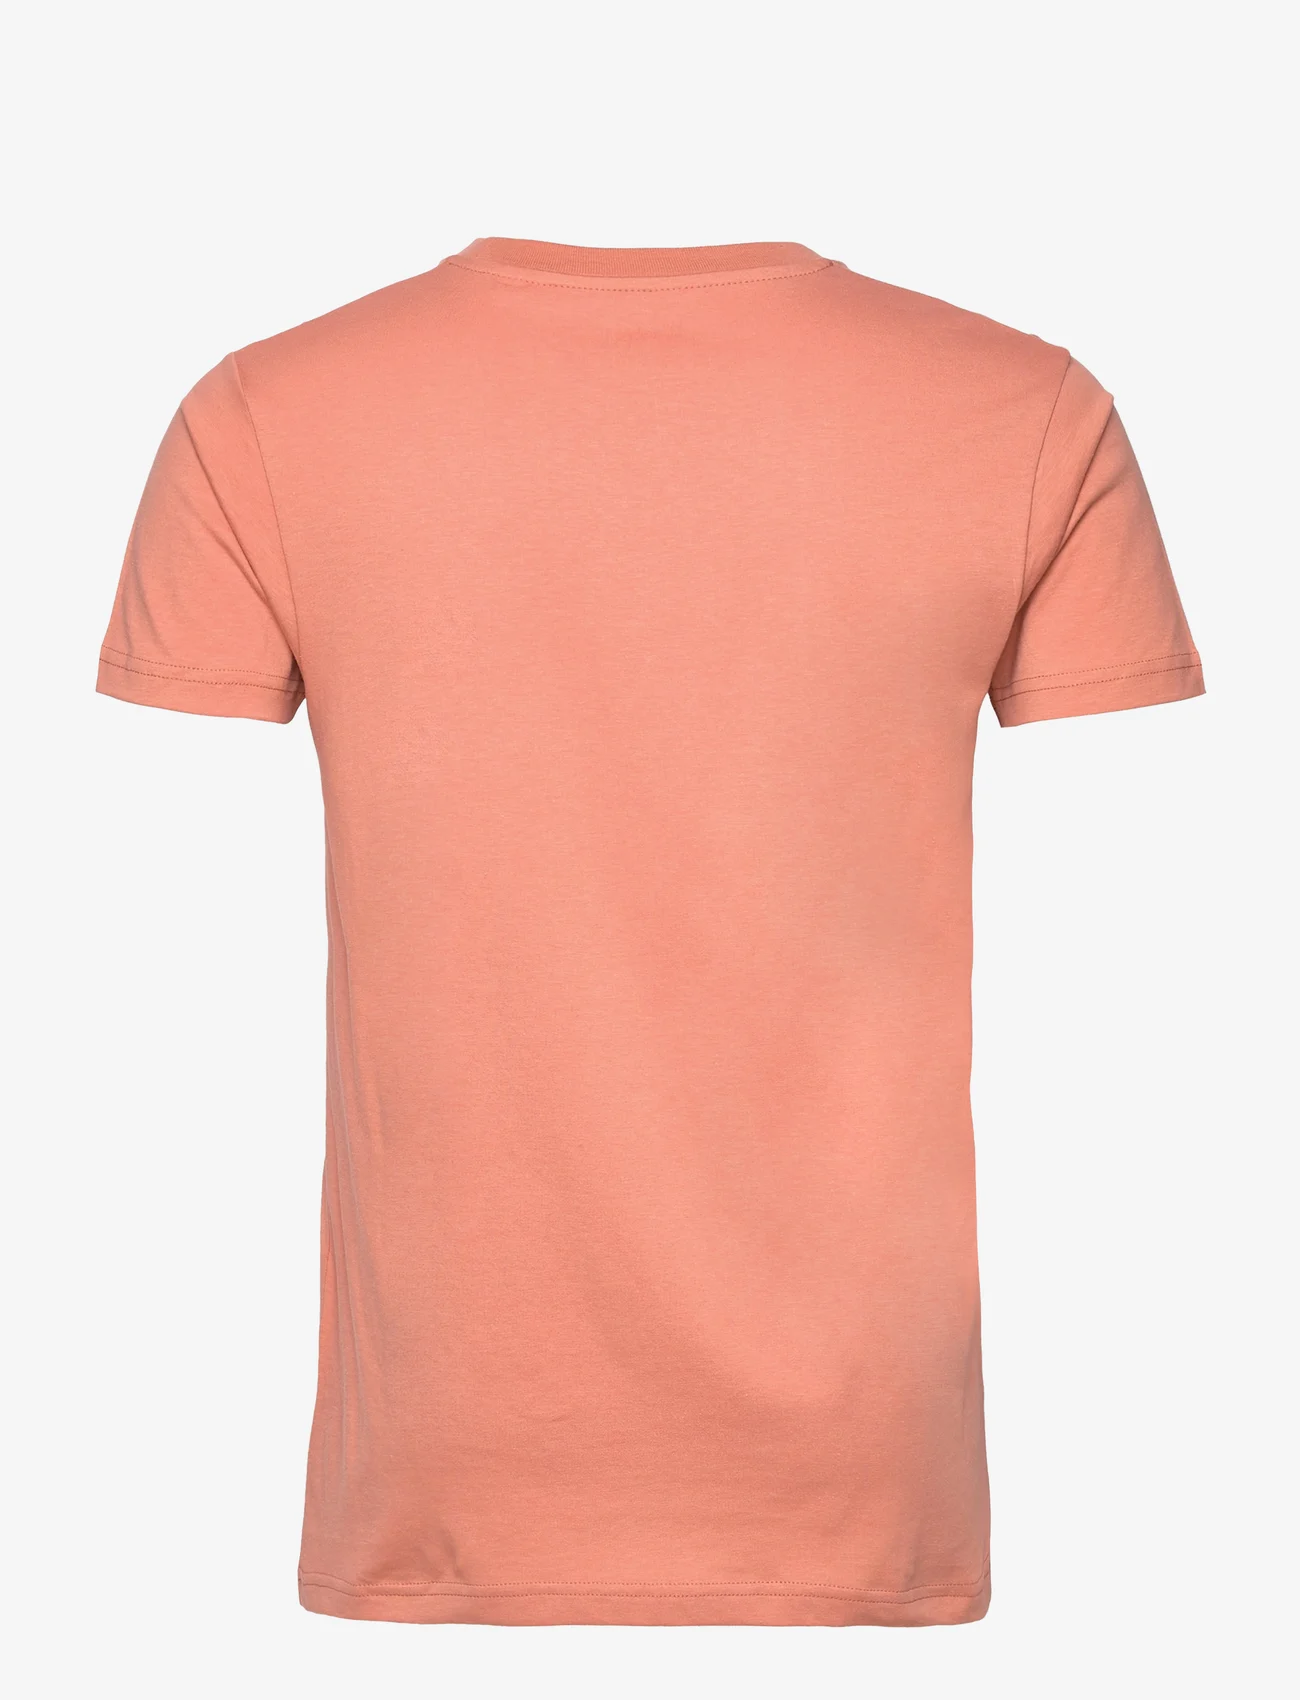 Mads Nørgaard - Organic Thor Tee - t-shirts - rose dawn - 1